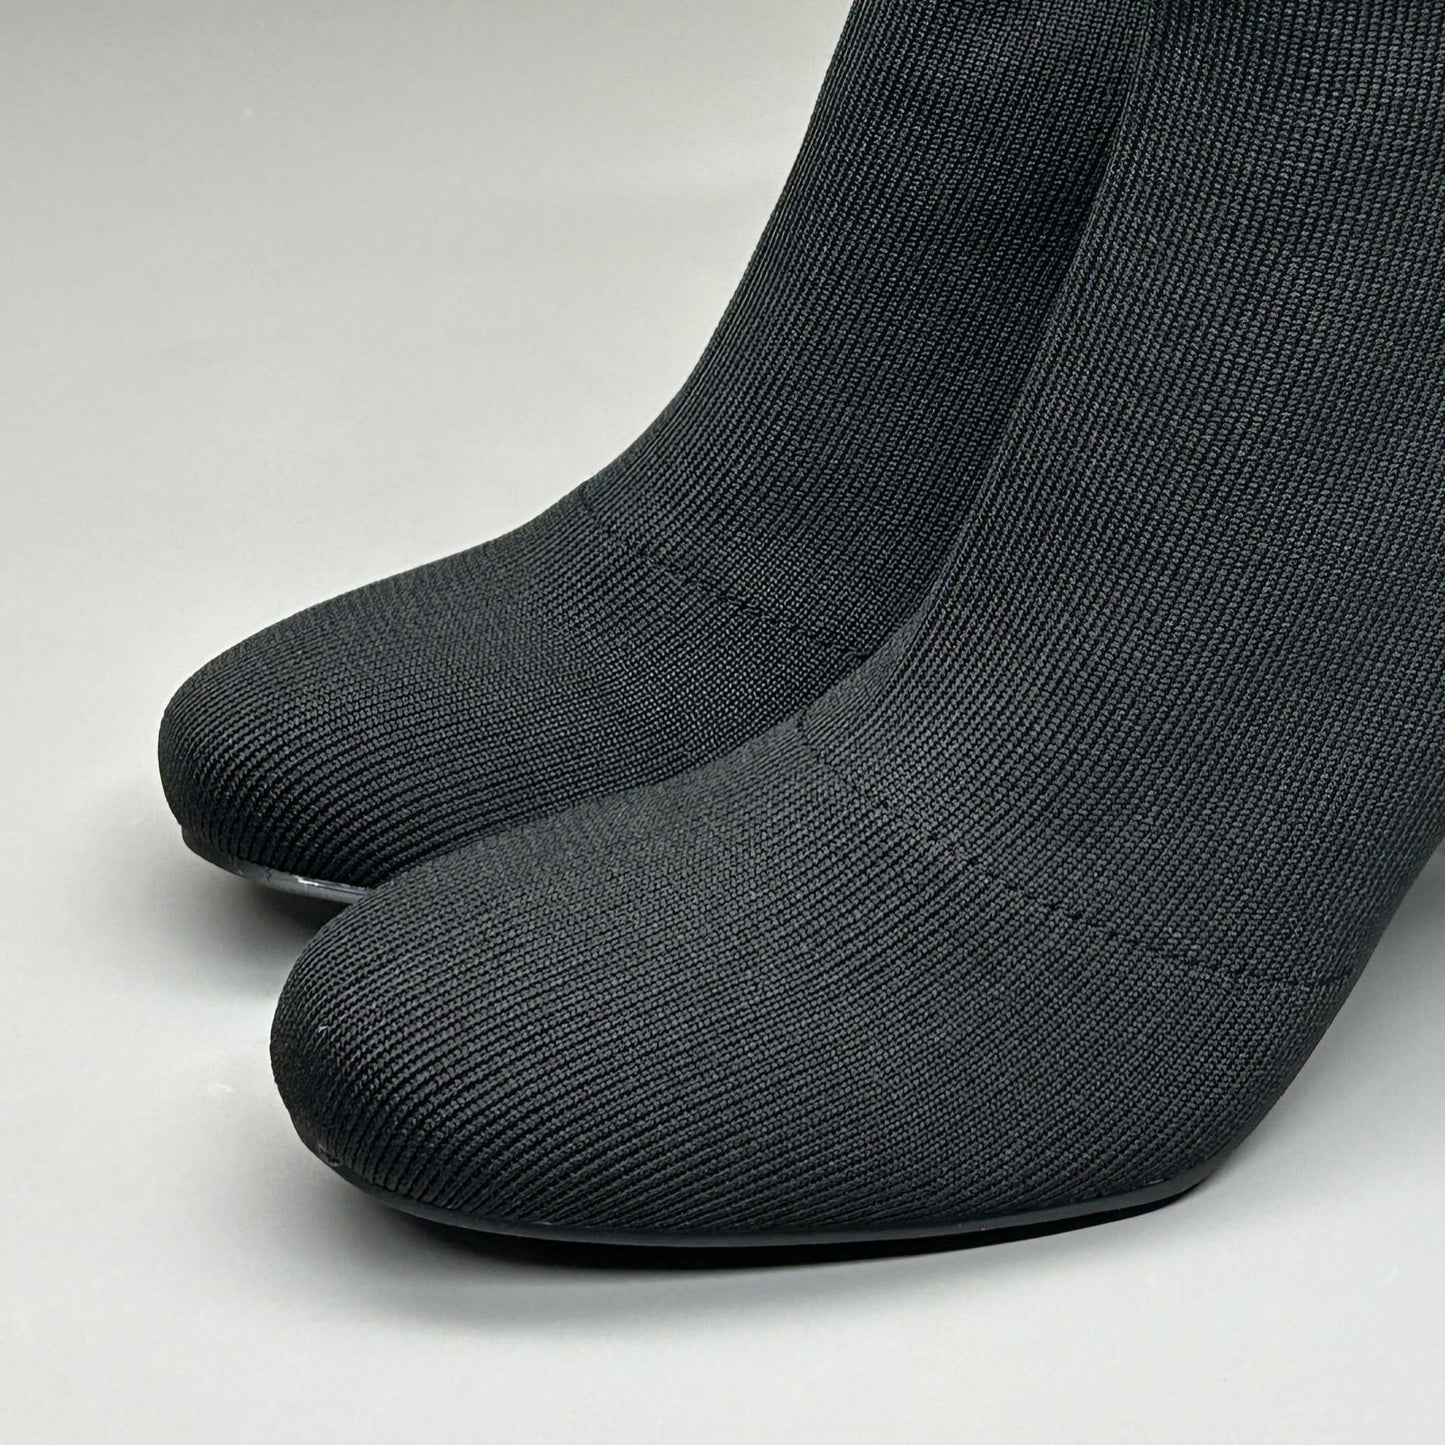 MIA Erika Fly Knit Booties Dress Boots Black 2” Heel Sz 9 GS7553115Y (New)